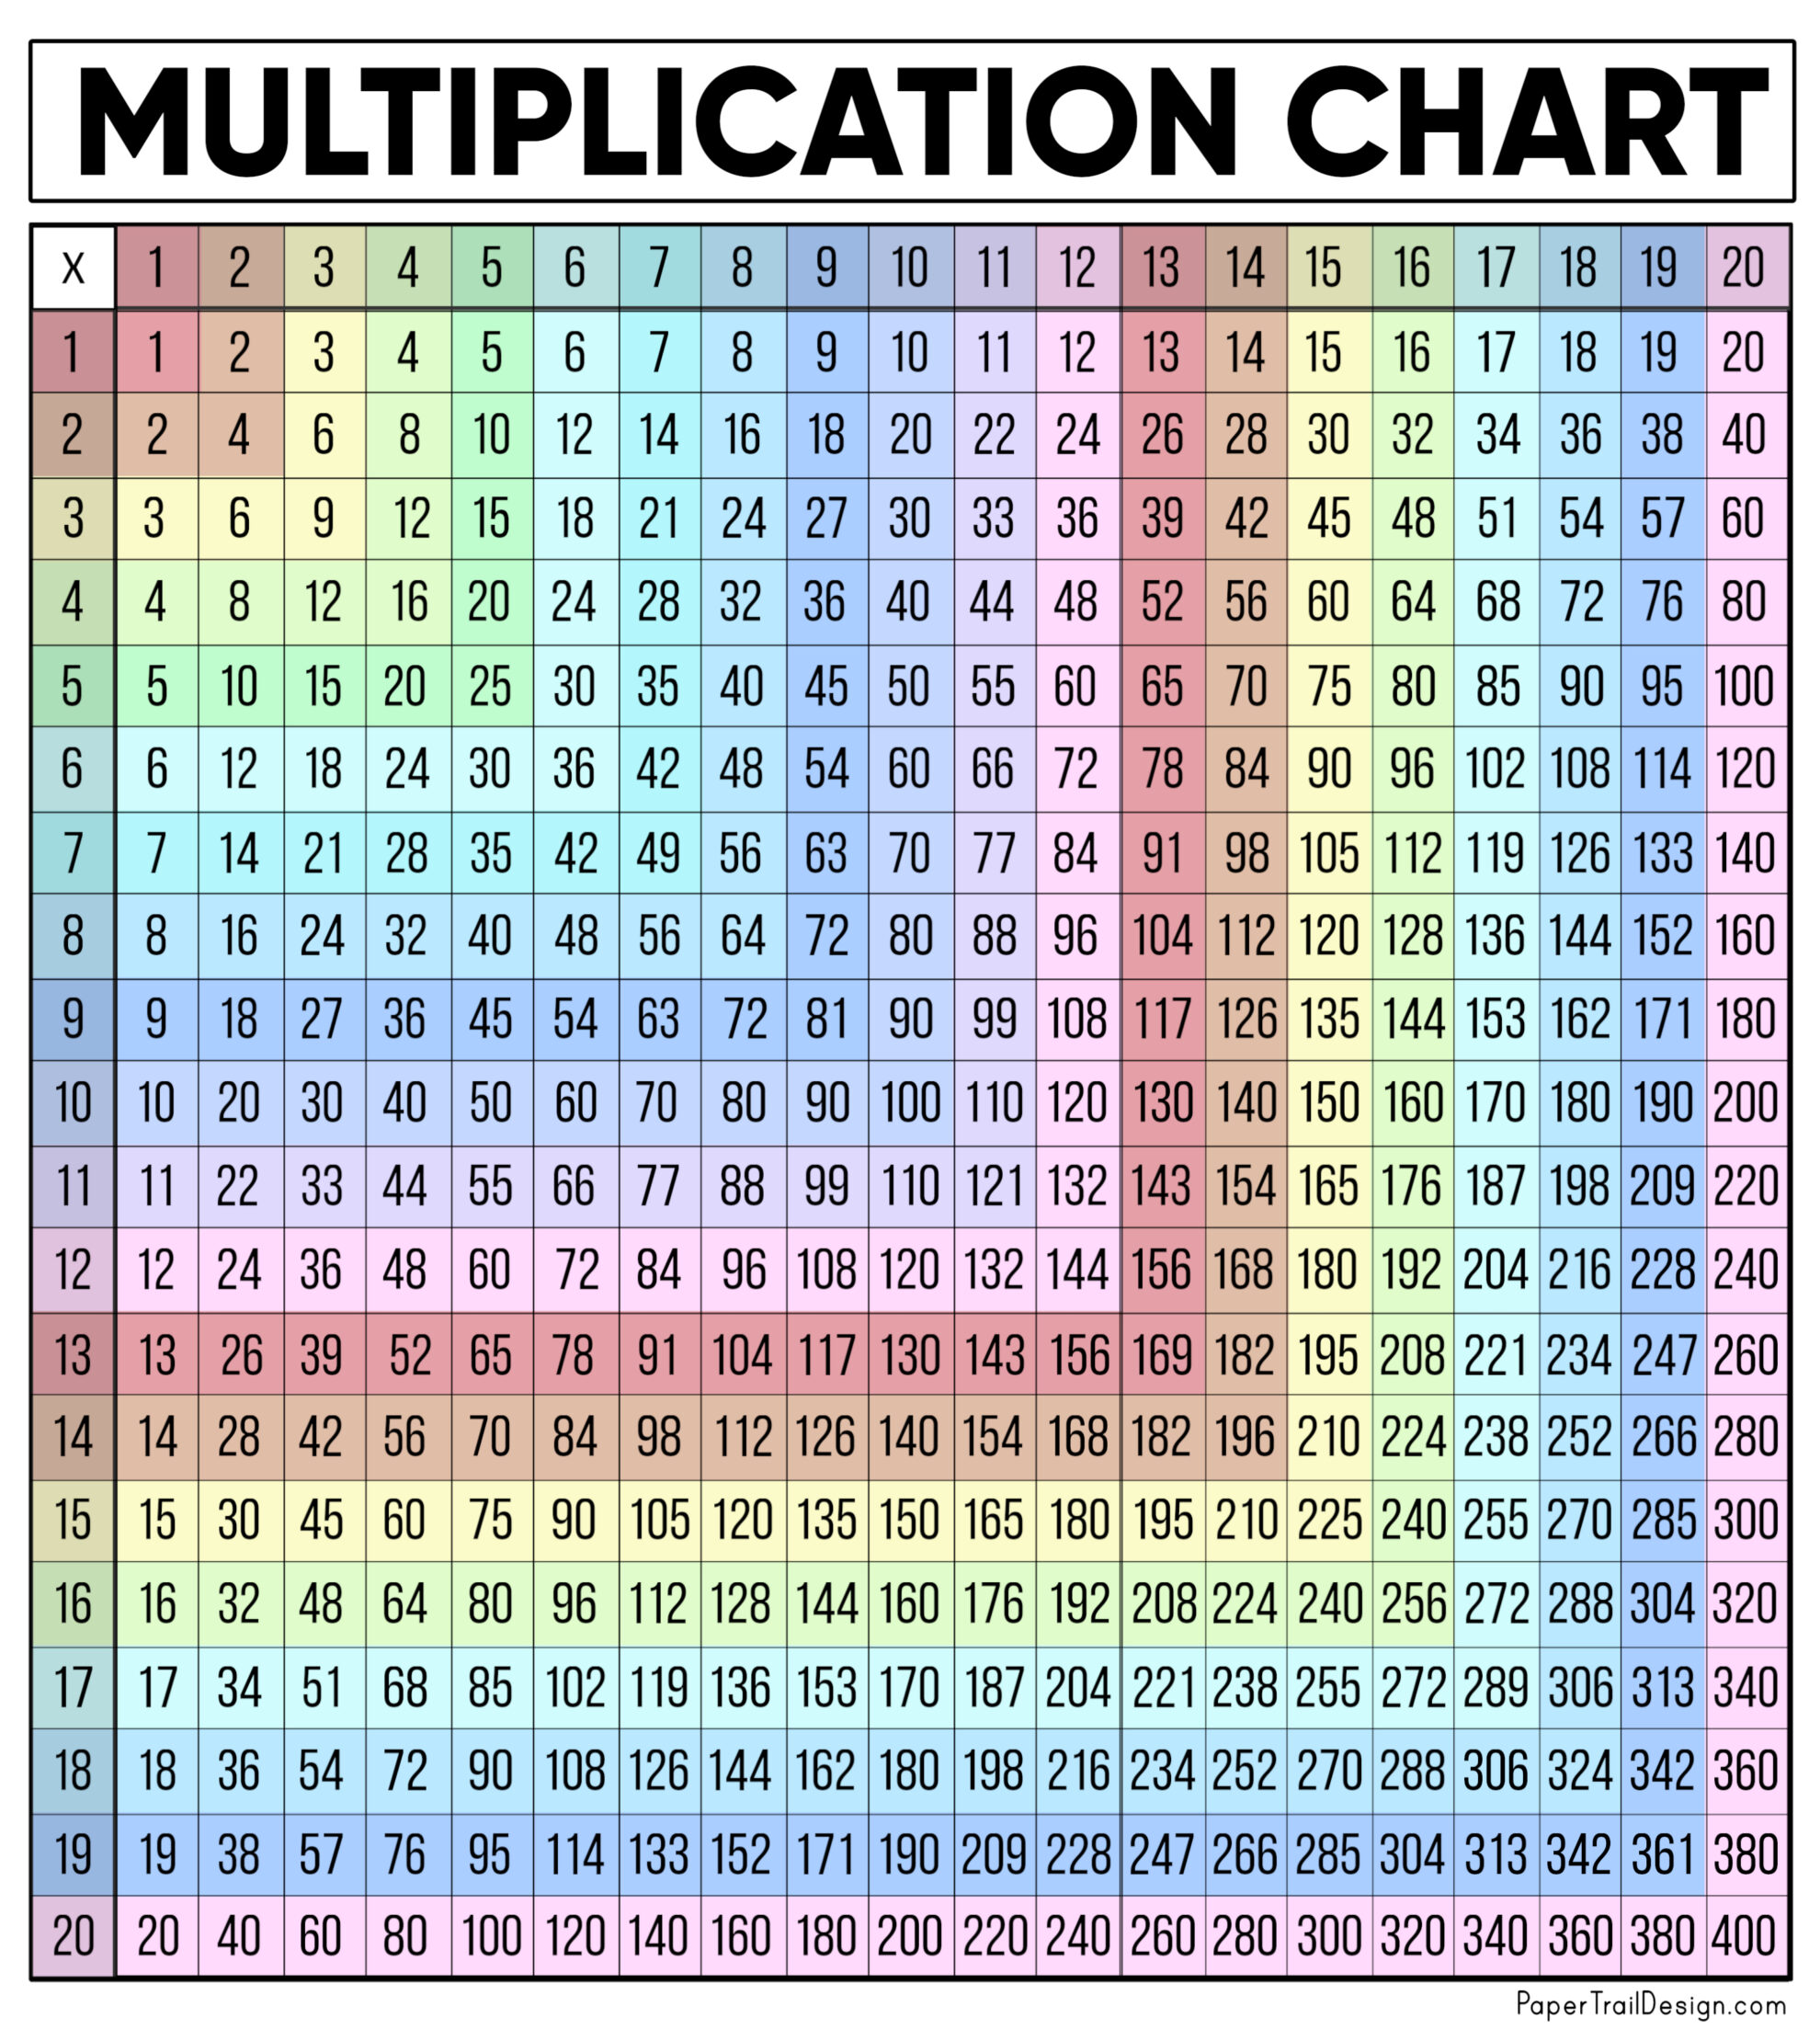 multiplication-table-1-through-100-daxmouse